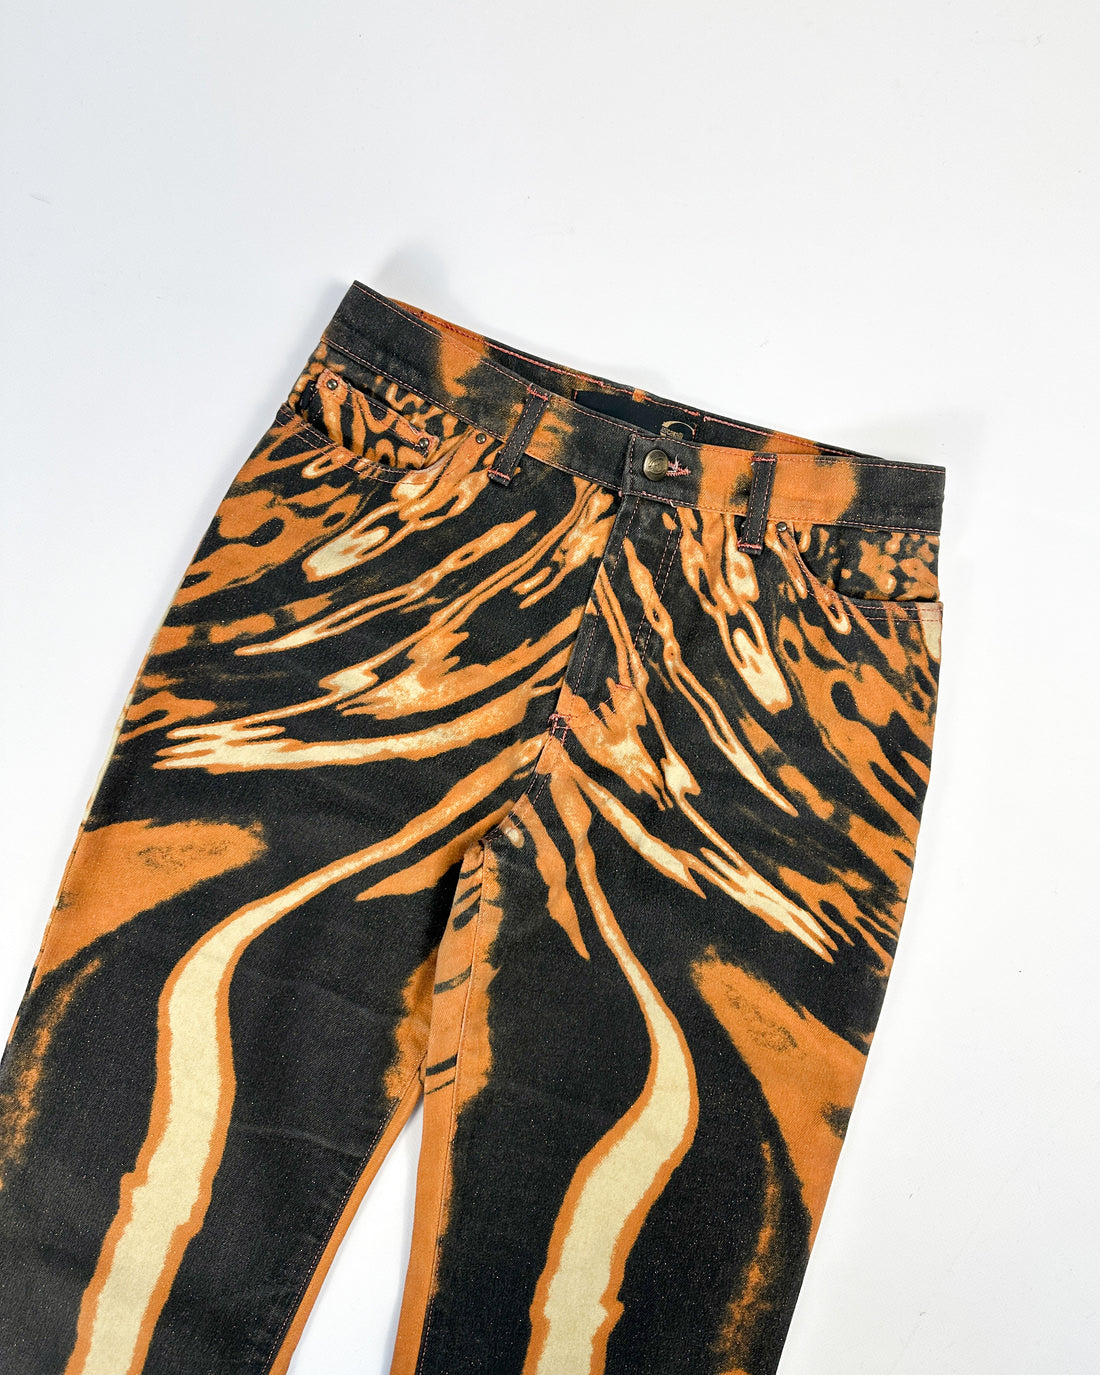 Roberto Cavalli Psychedelic Printed Pants 2000's